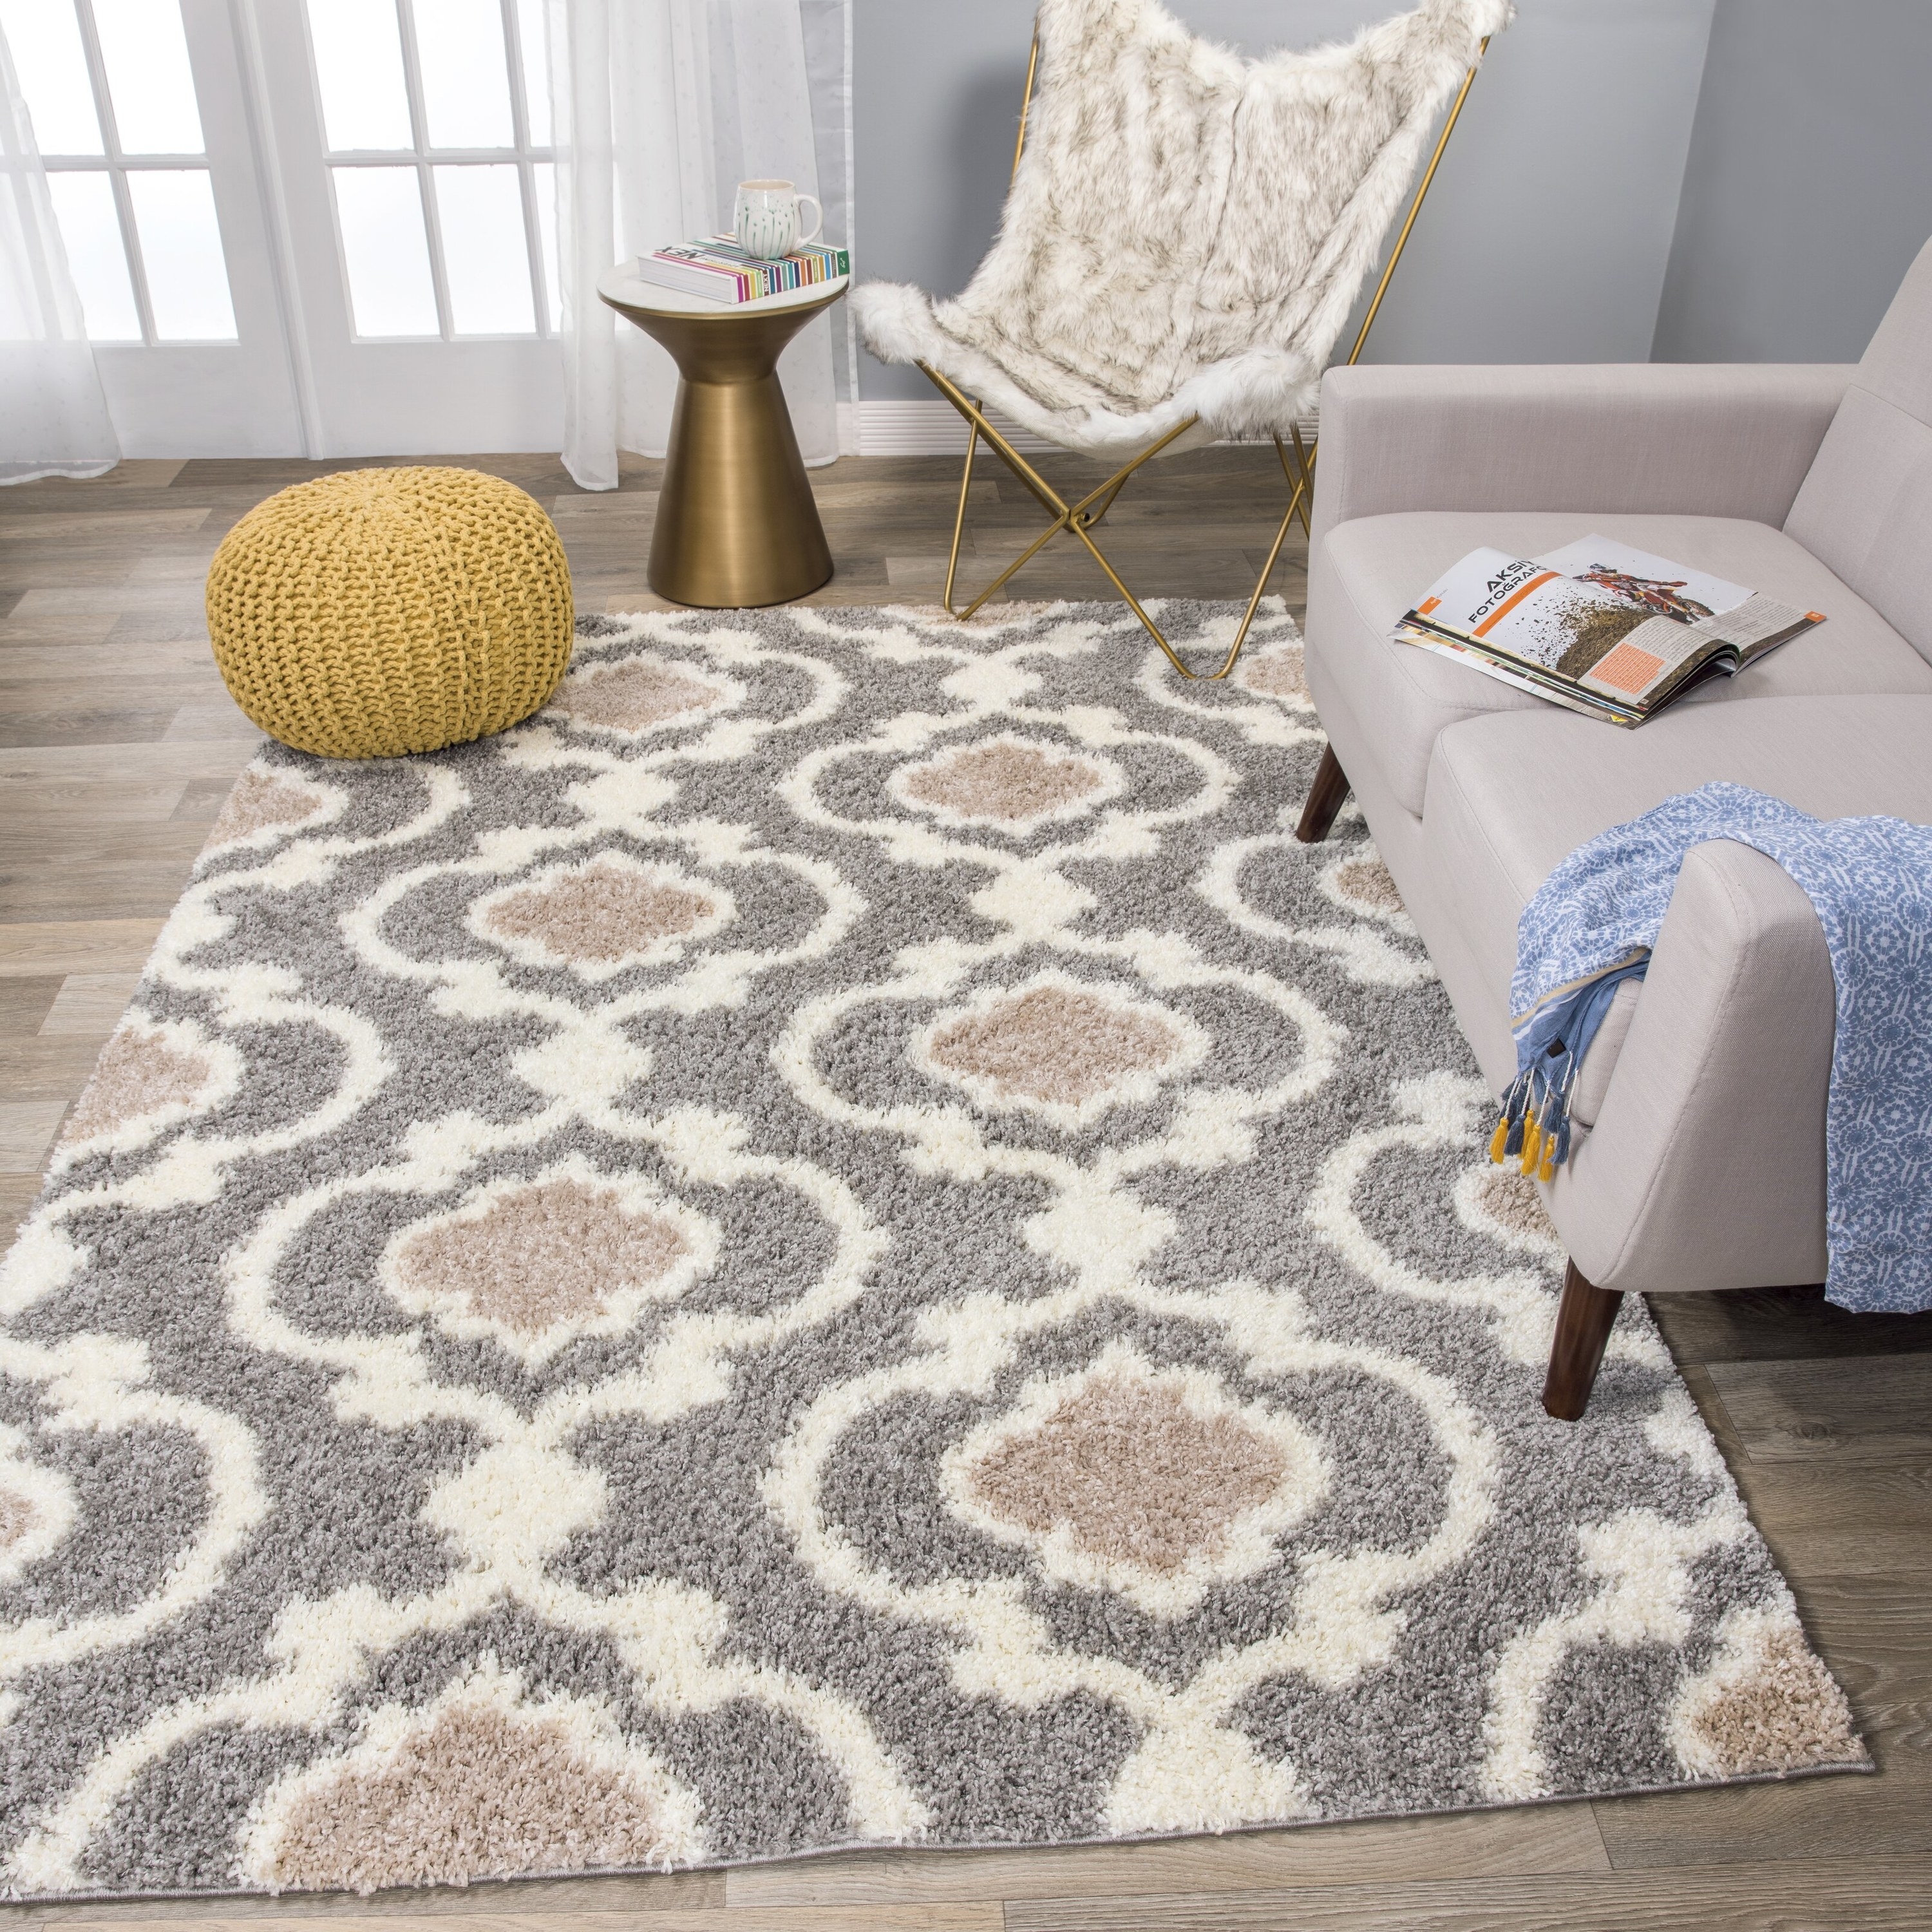 Geometric rug in living room